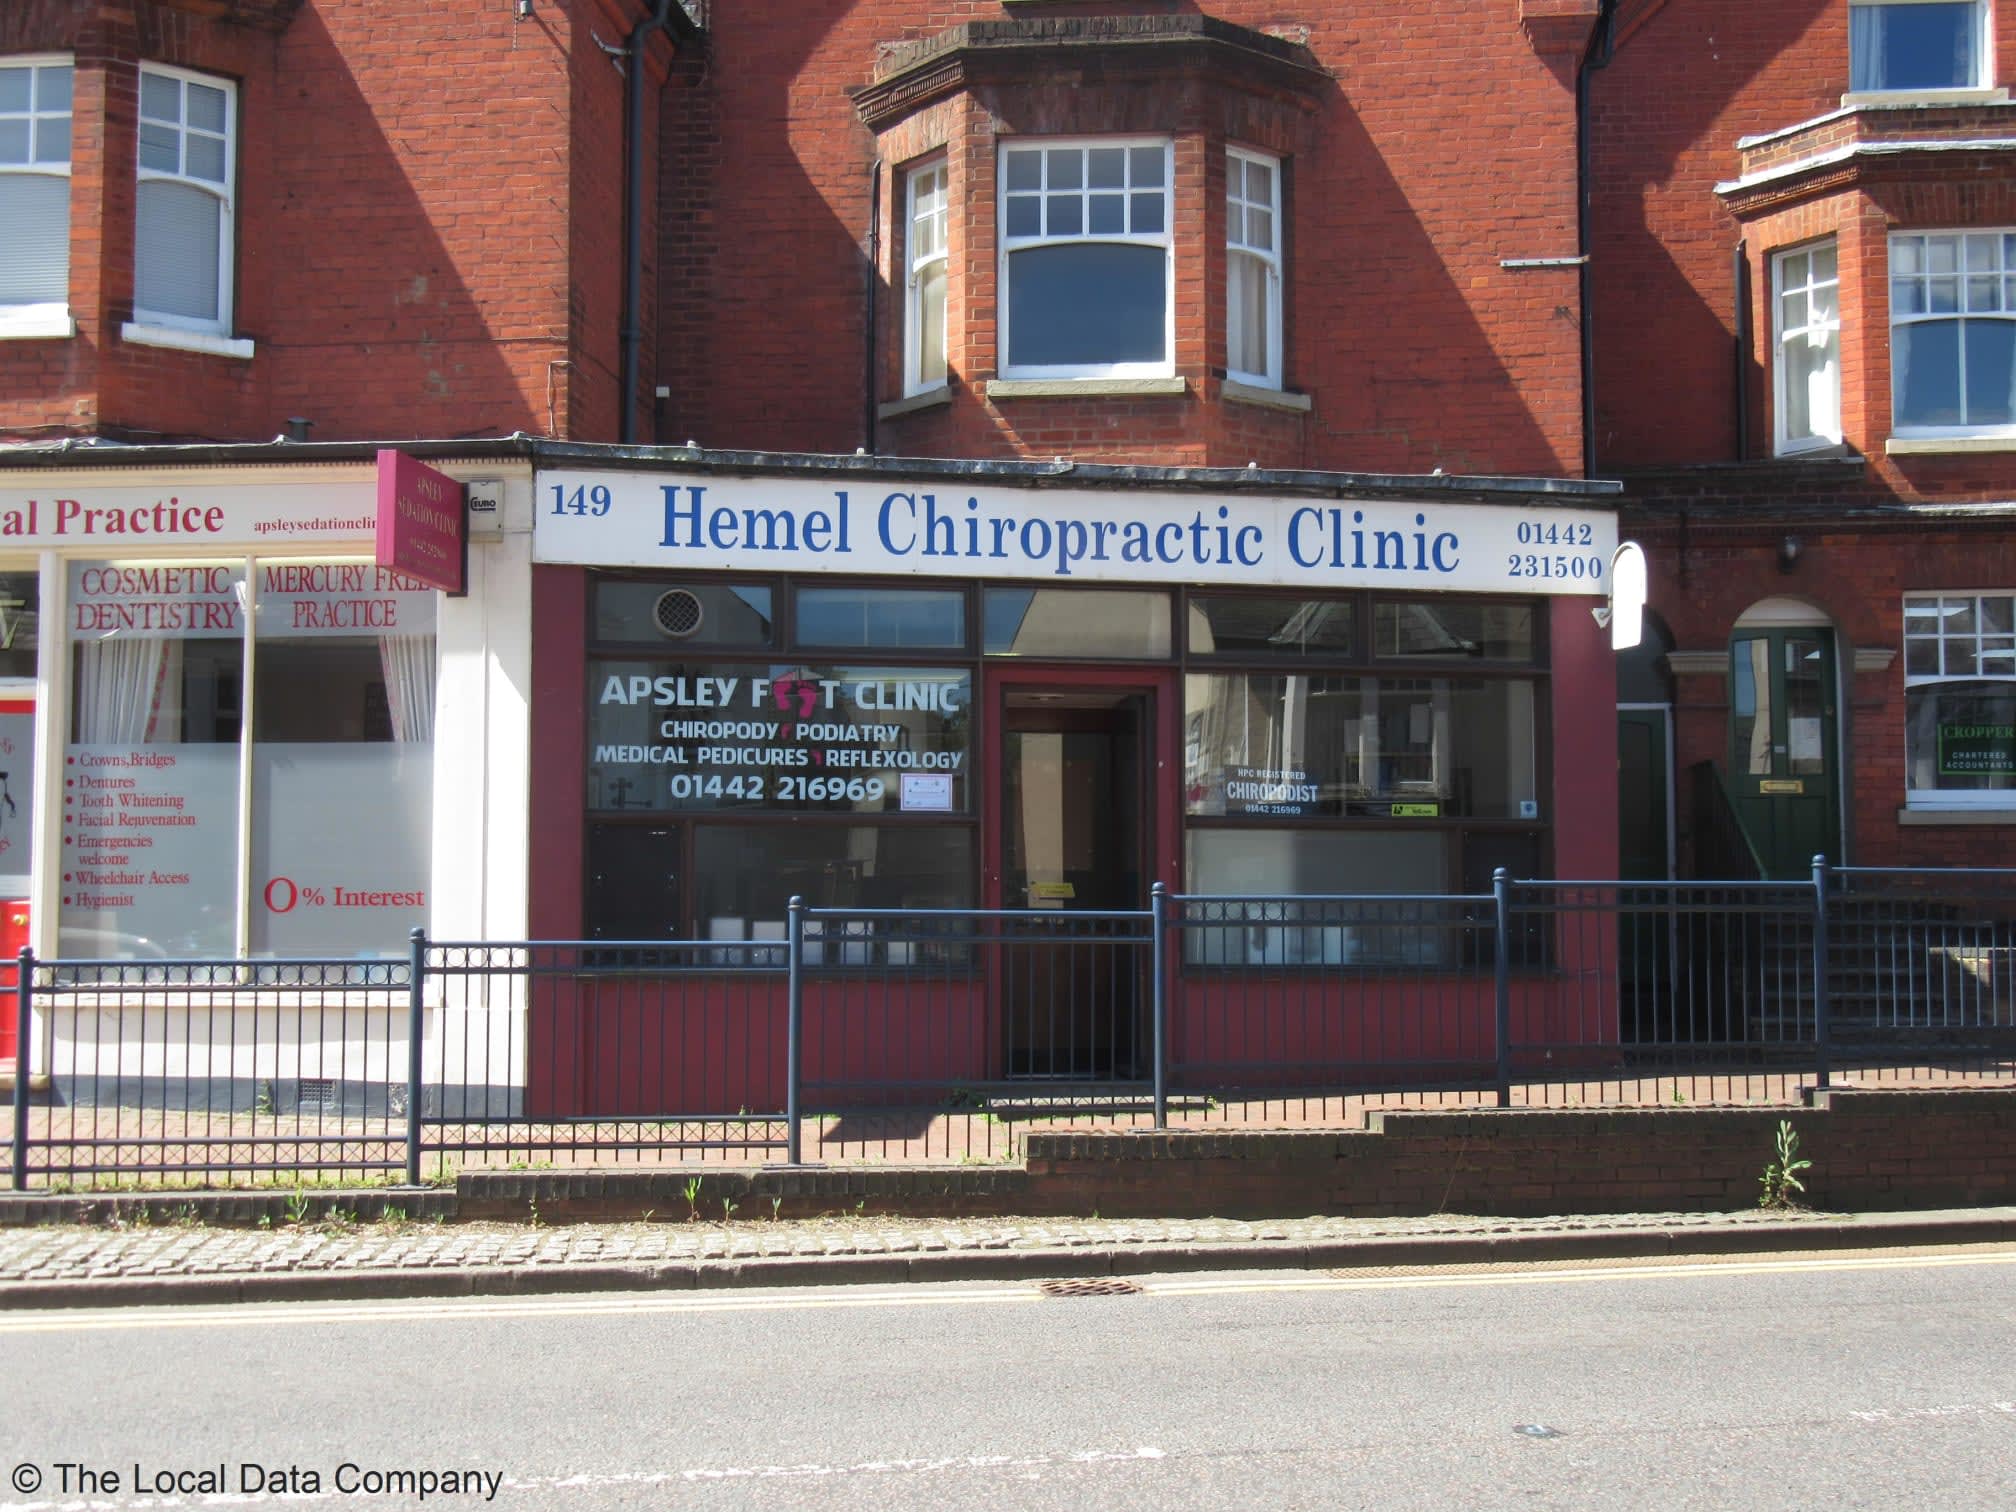 Images Hemel Chiropractic Clinic